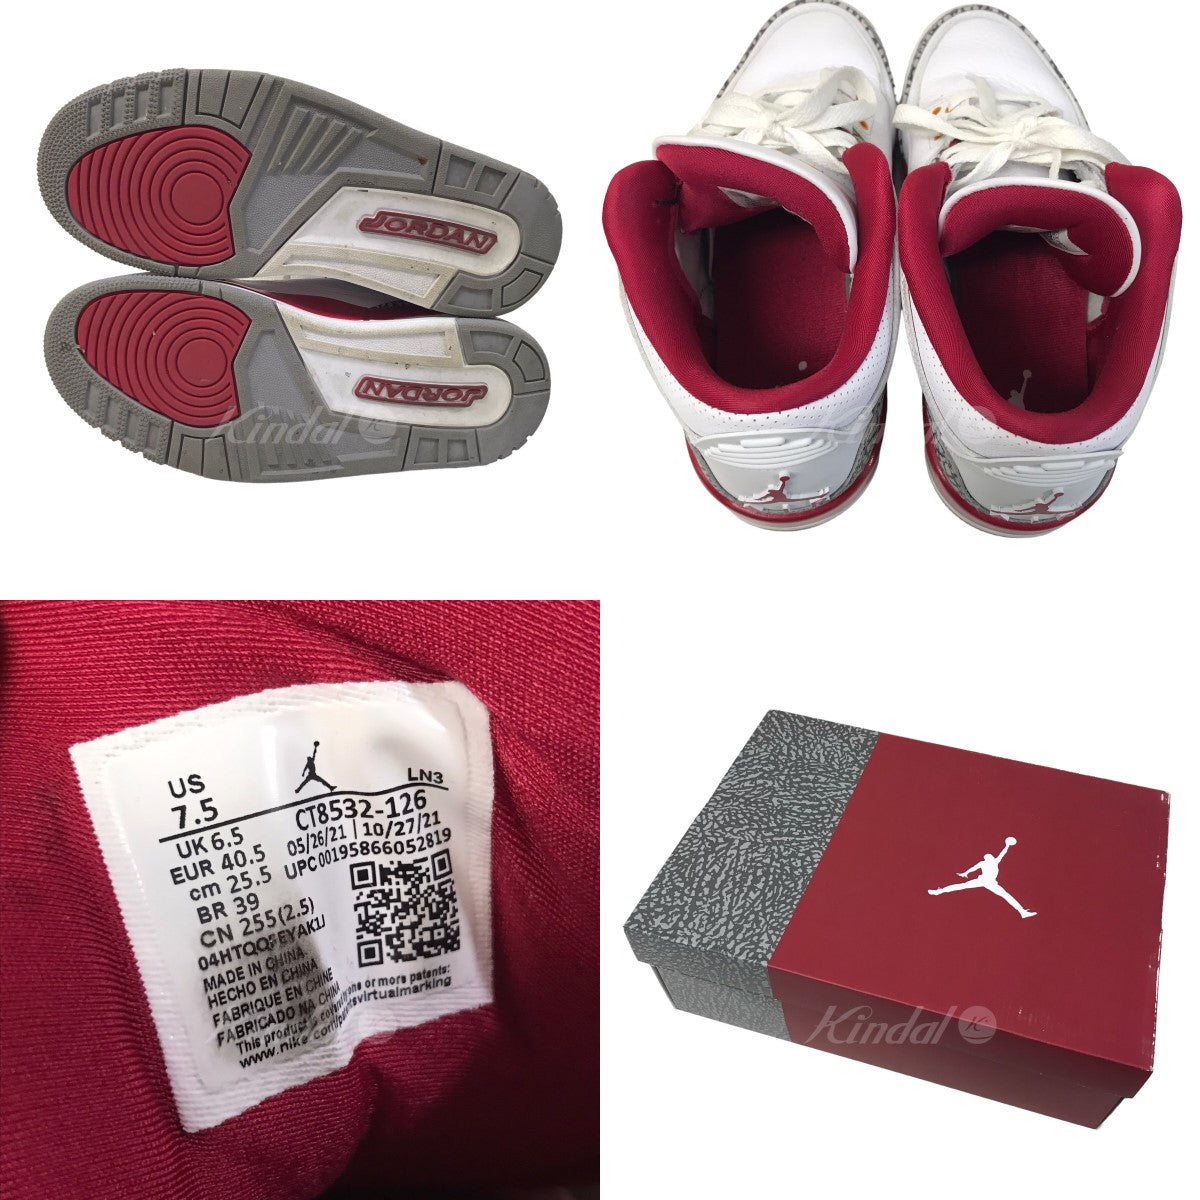 NIKE(ナイキ) 「Nike Air Jordan 3 Cardinal Red」ローカット ...